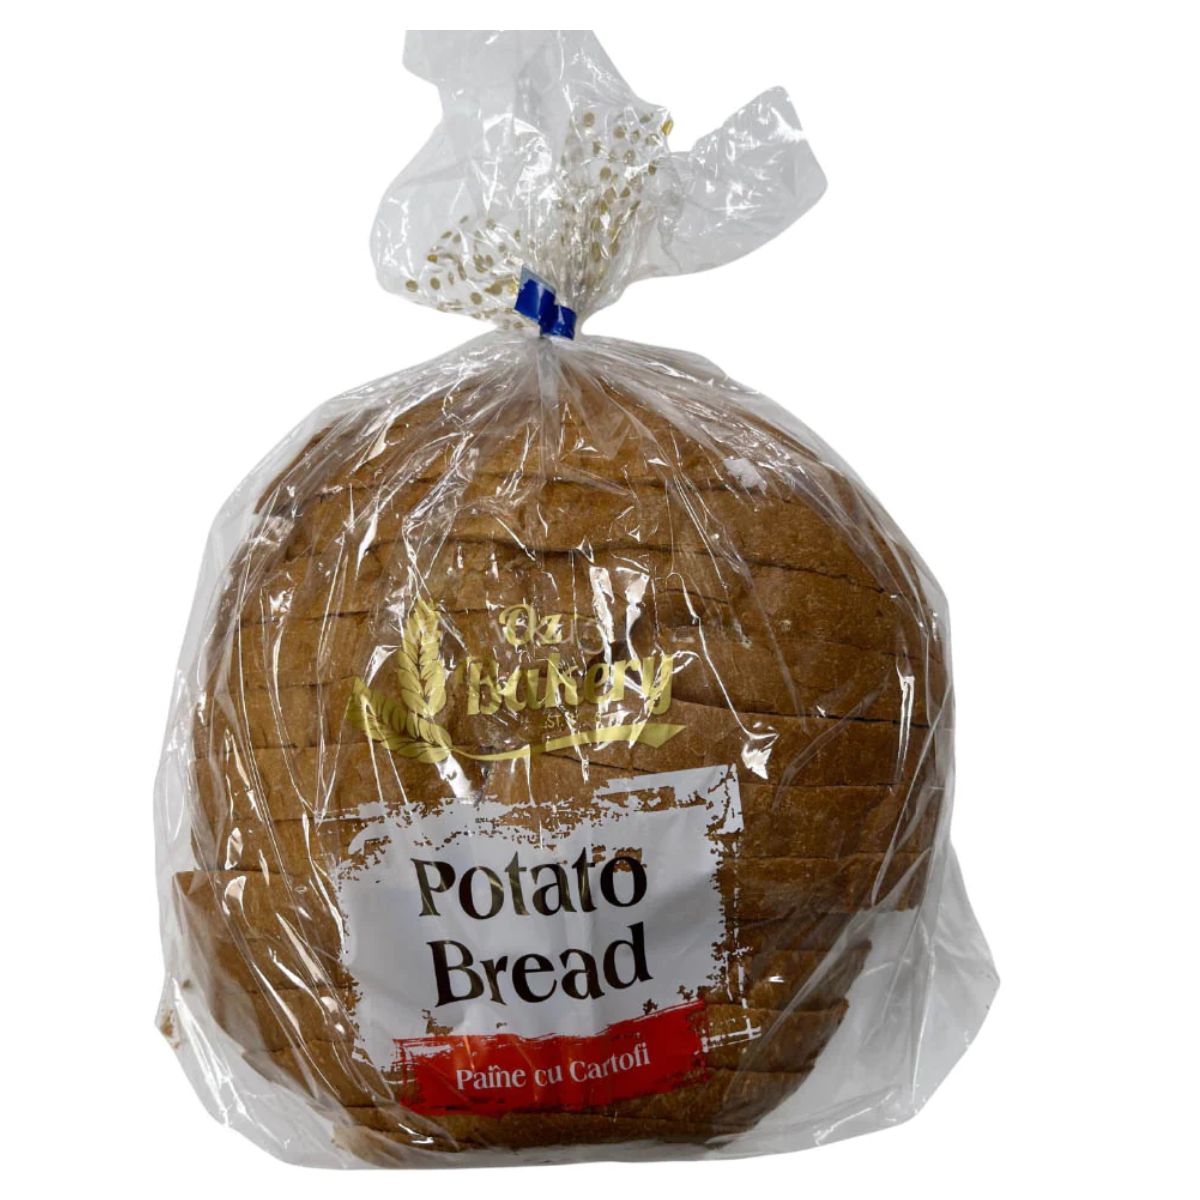 A bag of Oz Bakery - Potato Bread - 550g on a white background.